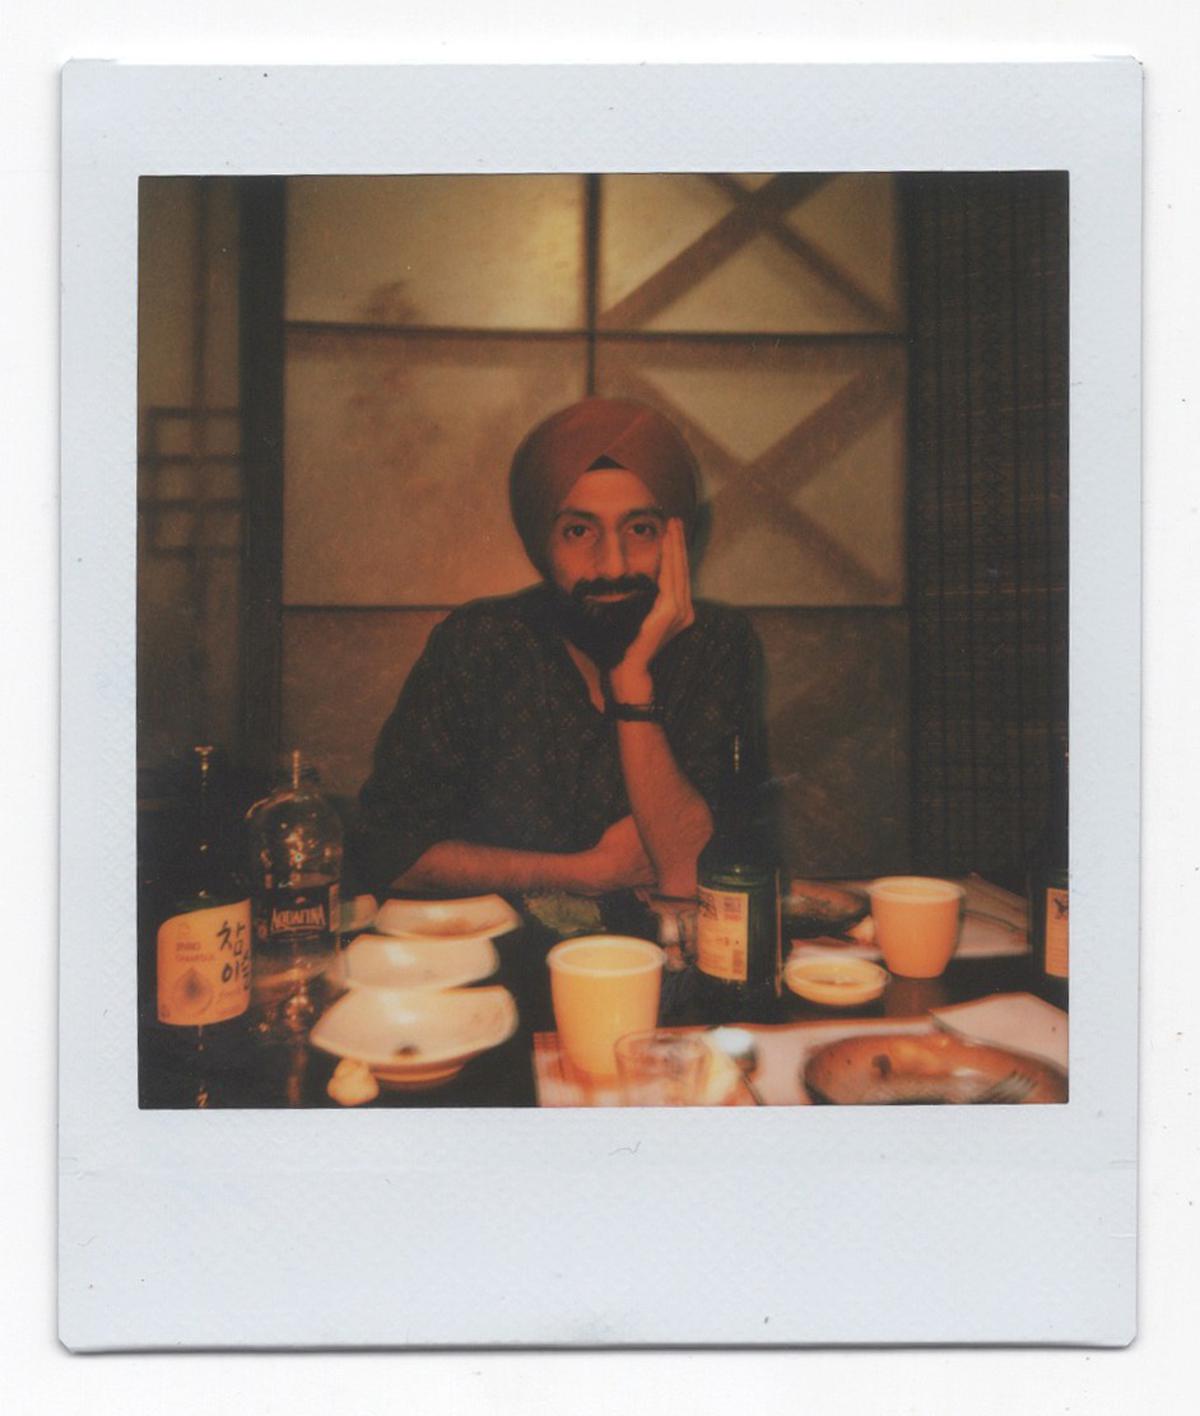 Karanjit Singh’s portrait clicked on an instant film camera